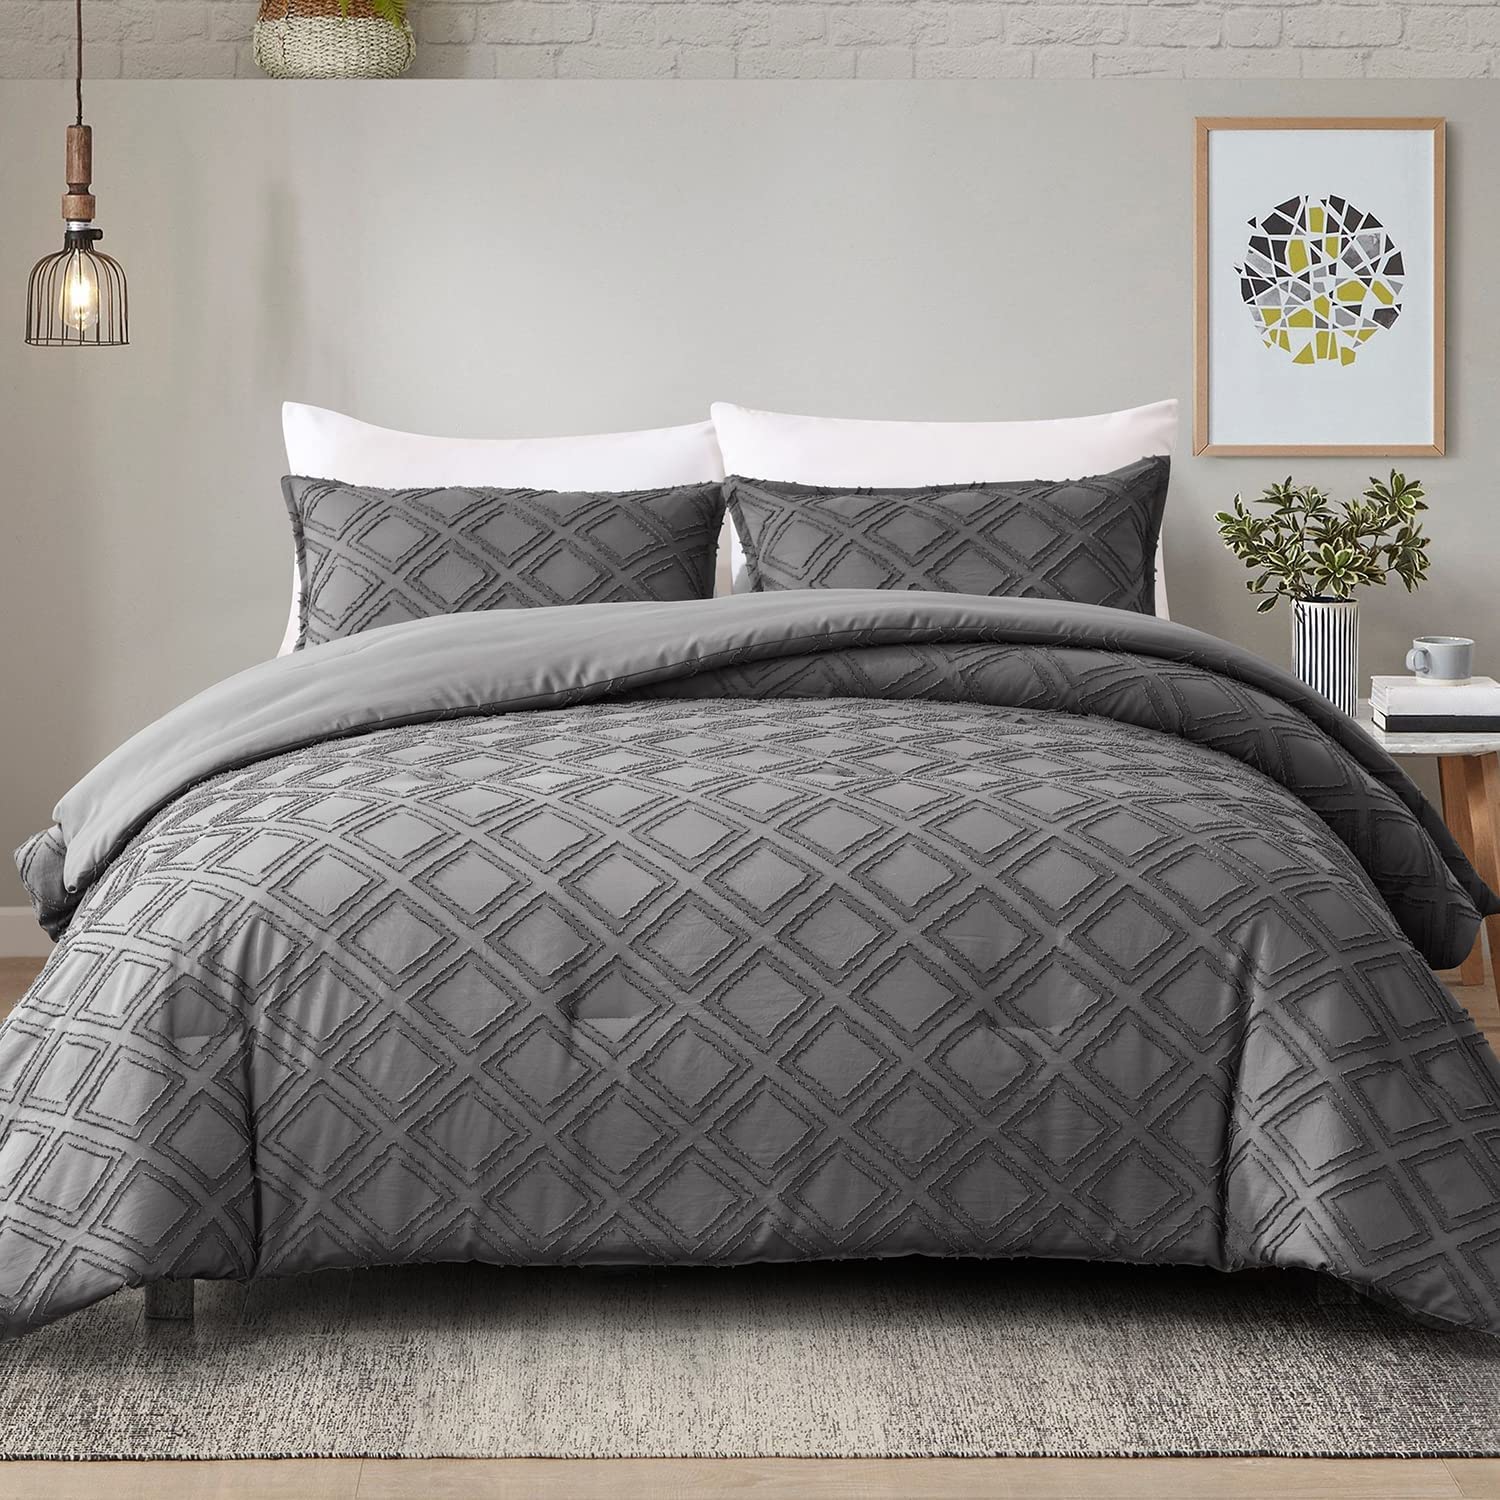 Wellco 3 Piece Comforter Bedding Set- All Season Bedding Comforter Set, Checkered Tufted Ultra Soft Polyester Bedding Comforters